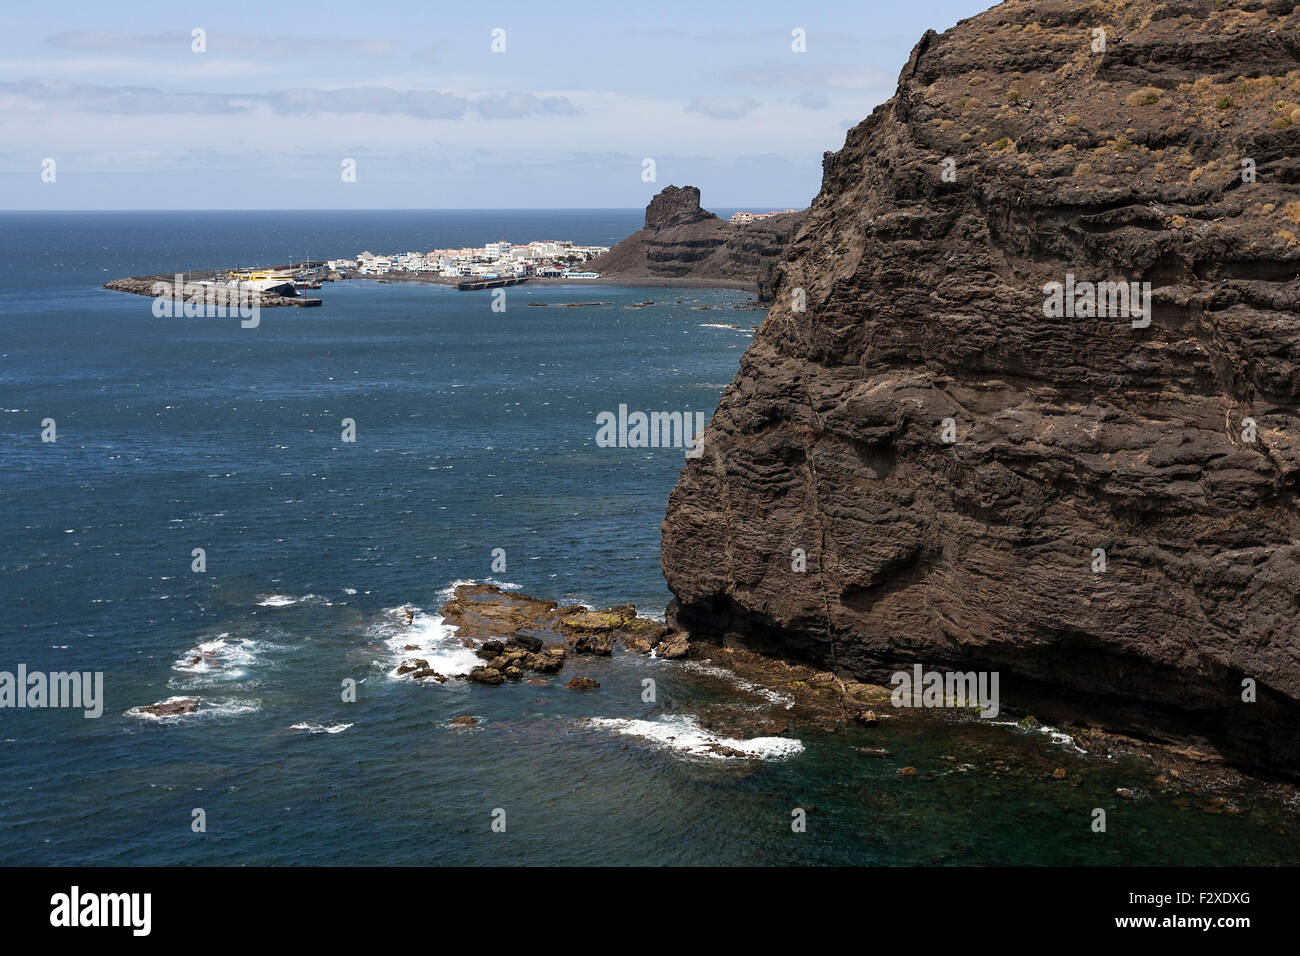 View of the rocky coast and Puerto de las Nieves, Gran Canaria, Canary Islands, Spain Stock Photo